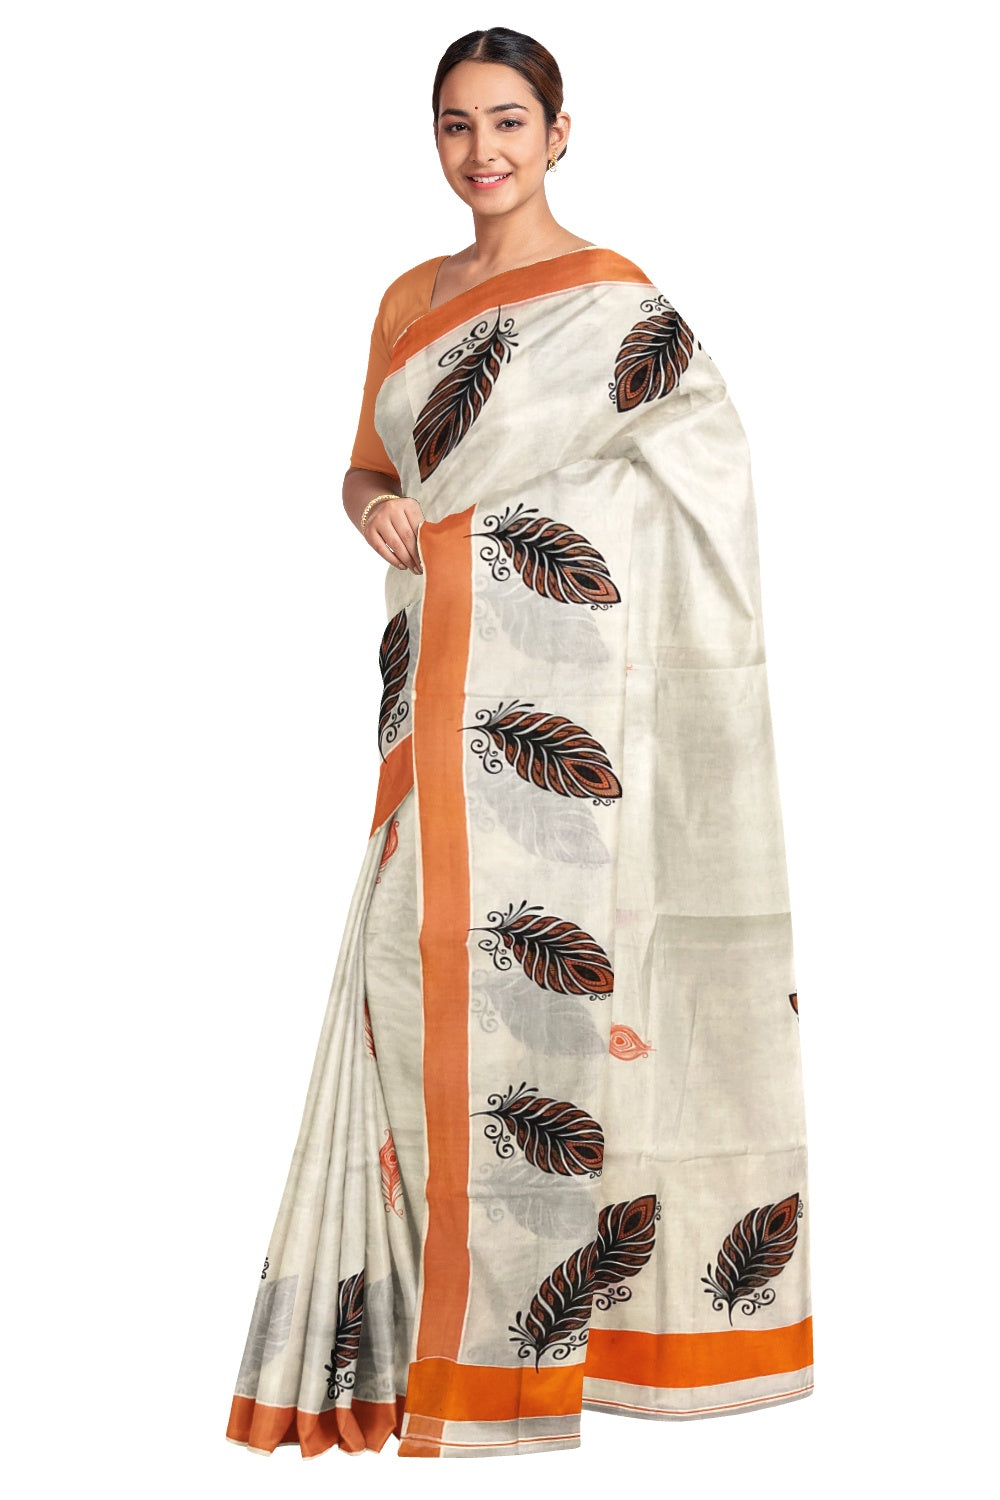 Pure Cotton Kerala Saree with Feather Block Printed Design and Orange Border